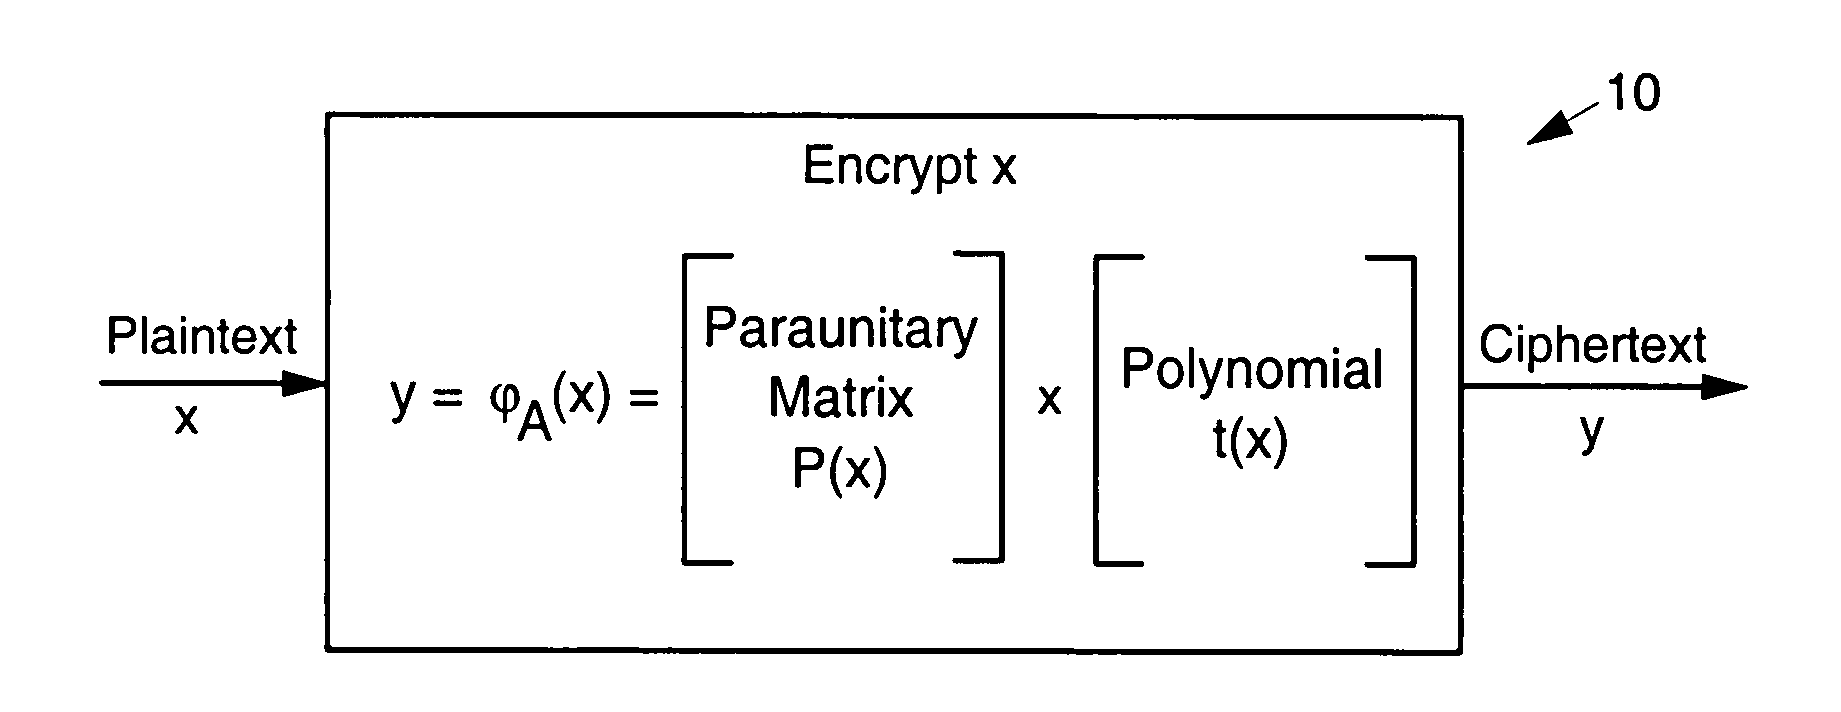 Asymmetric cryptosystem employing paraunitary matrices